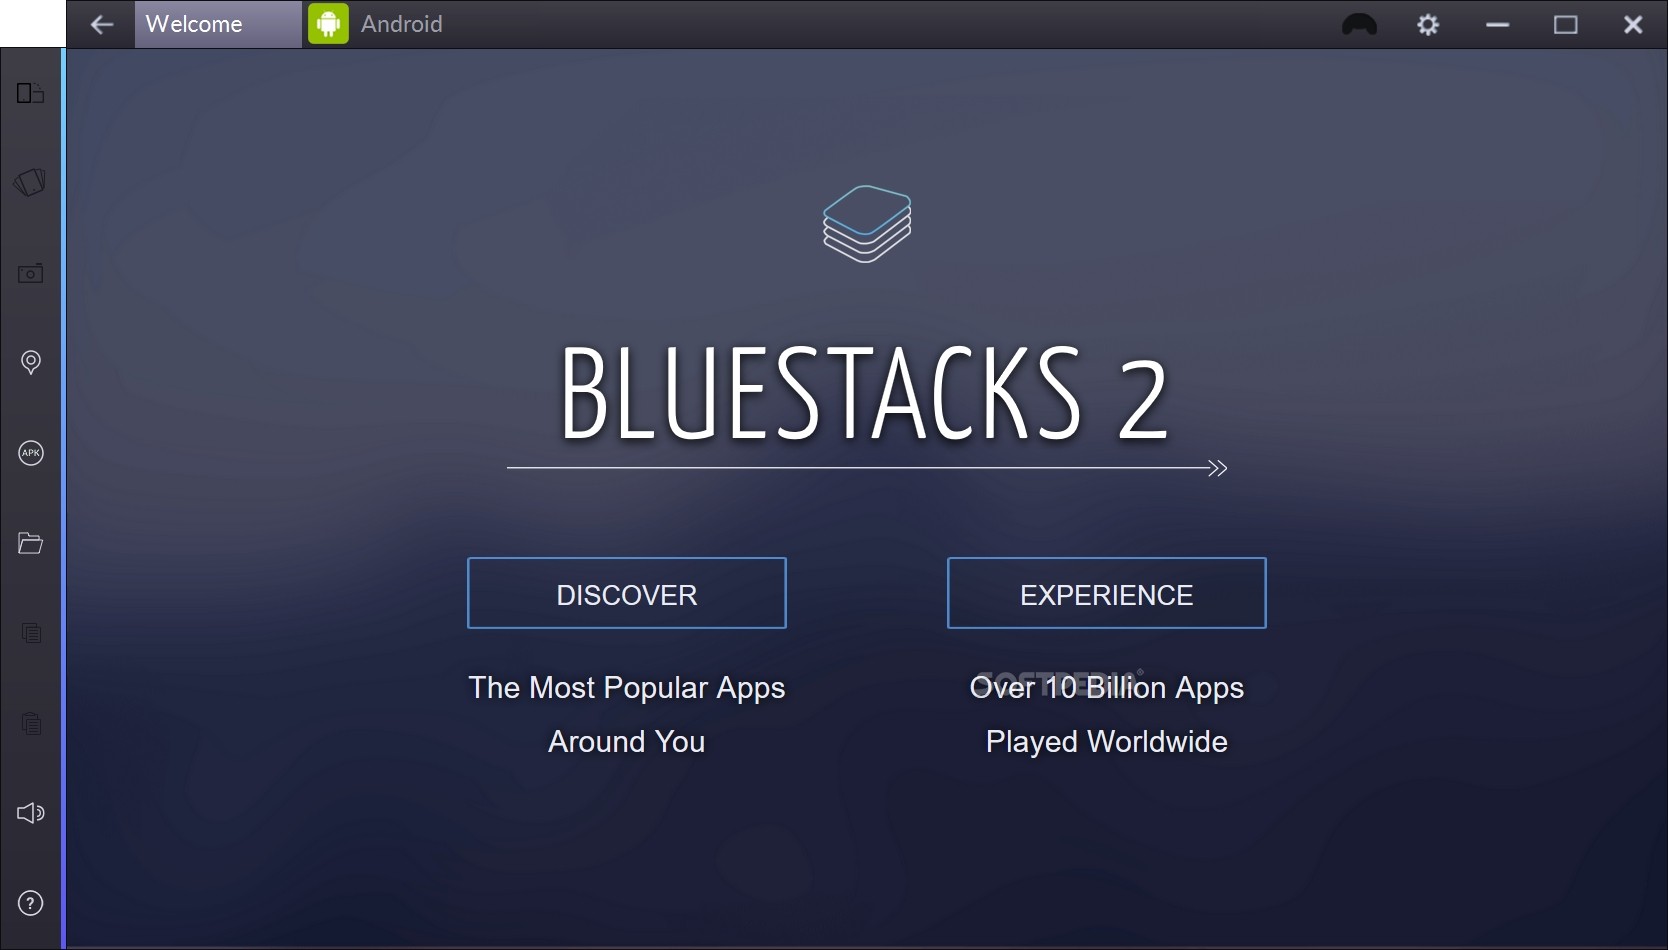 bluestacks 3 download windows 10